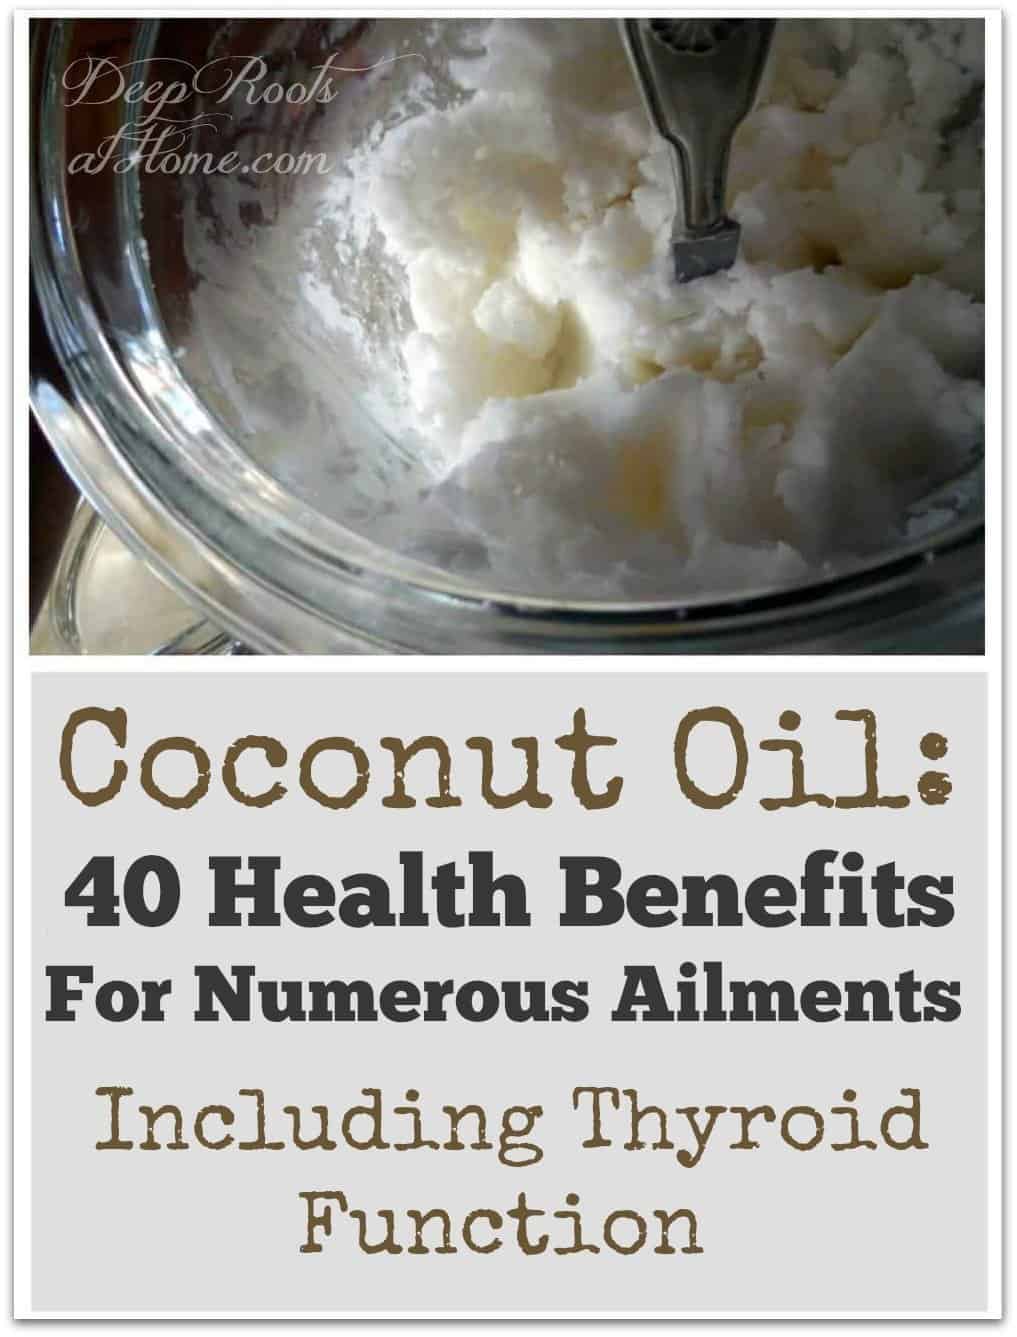 Coconut Oil: 40 Health Benefits For Numerous Ailments Incl. Thyroid Function. A glass tub on pure virgin coconut oil